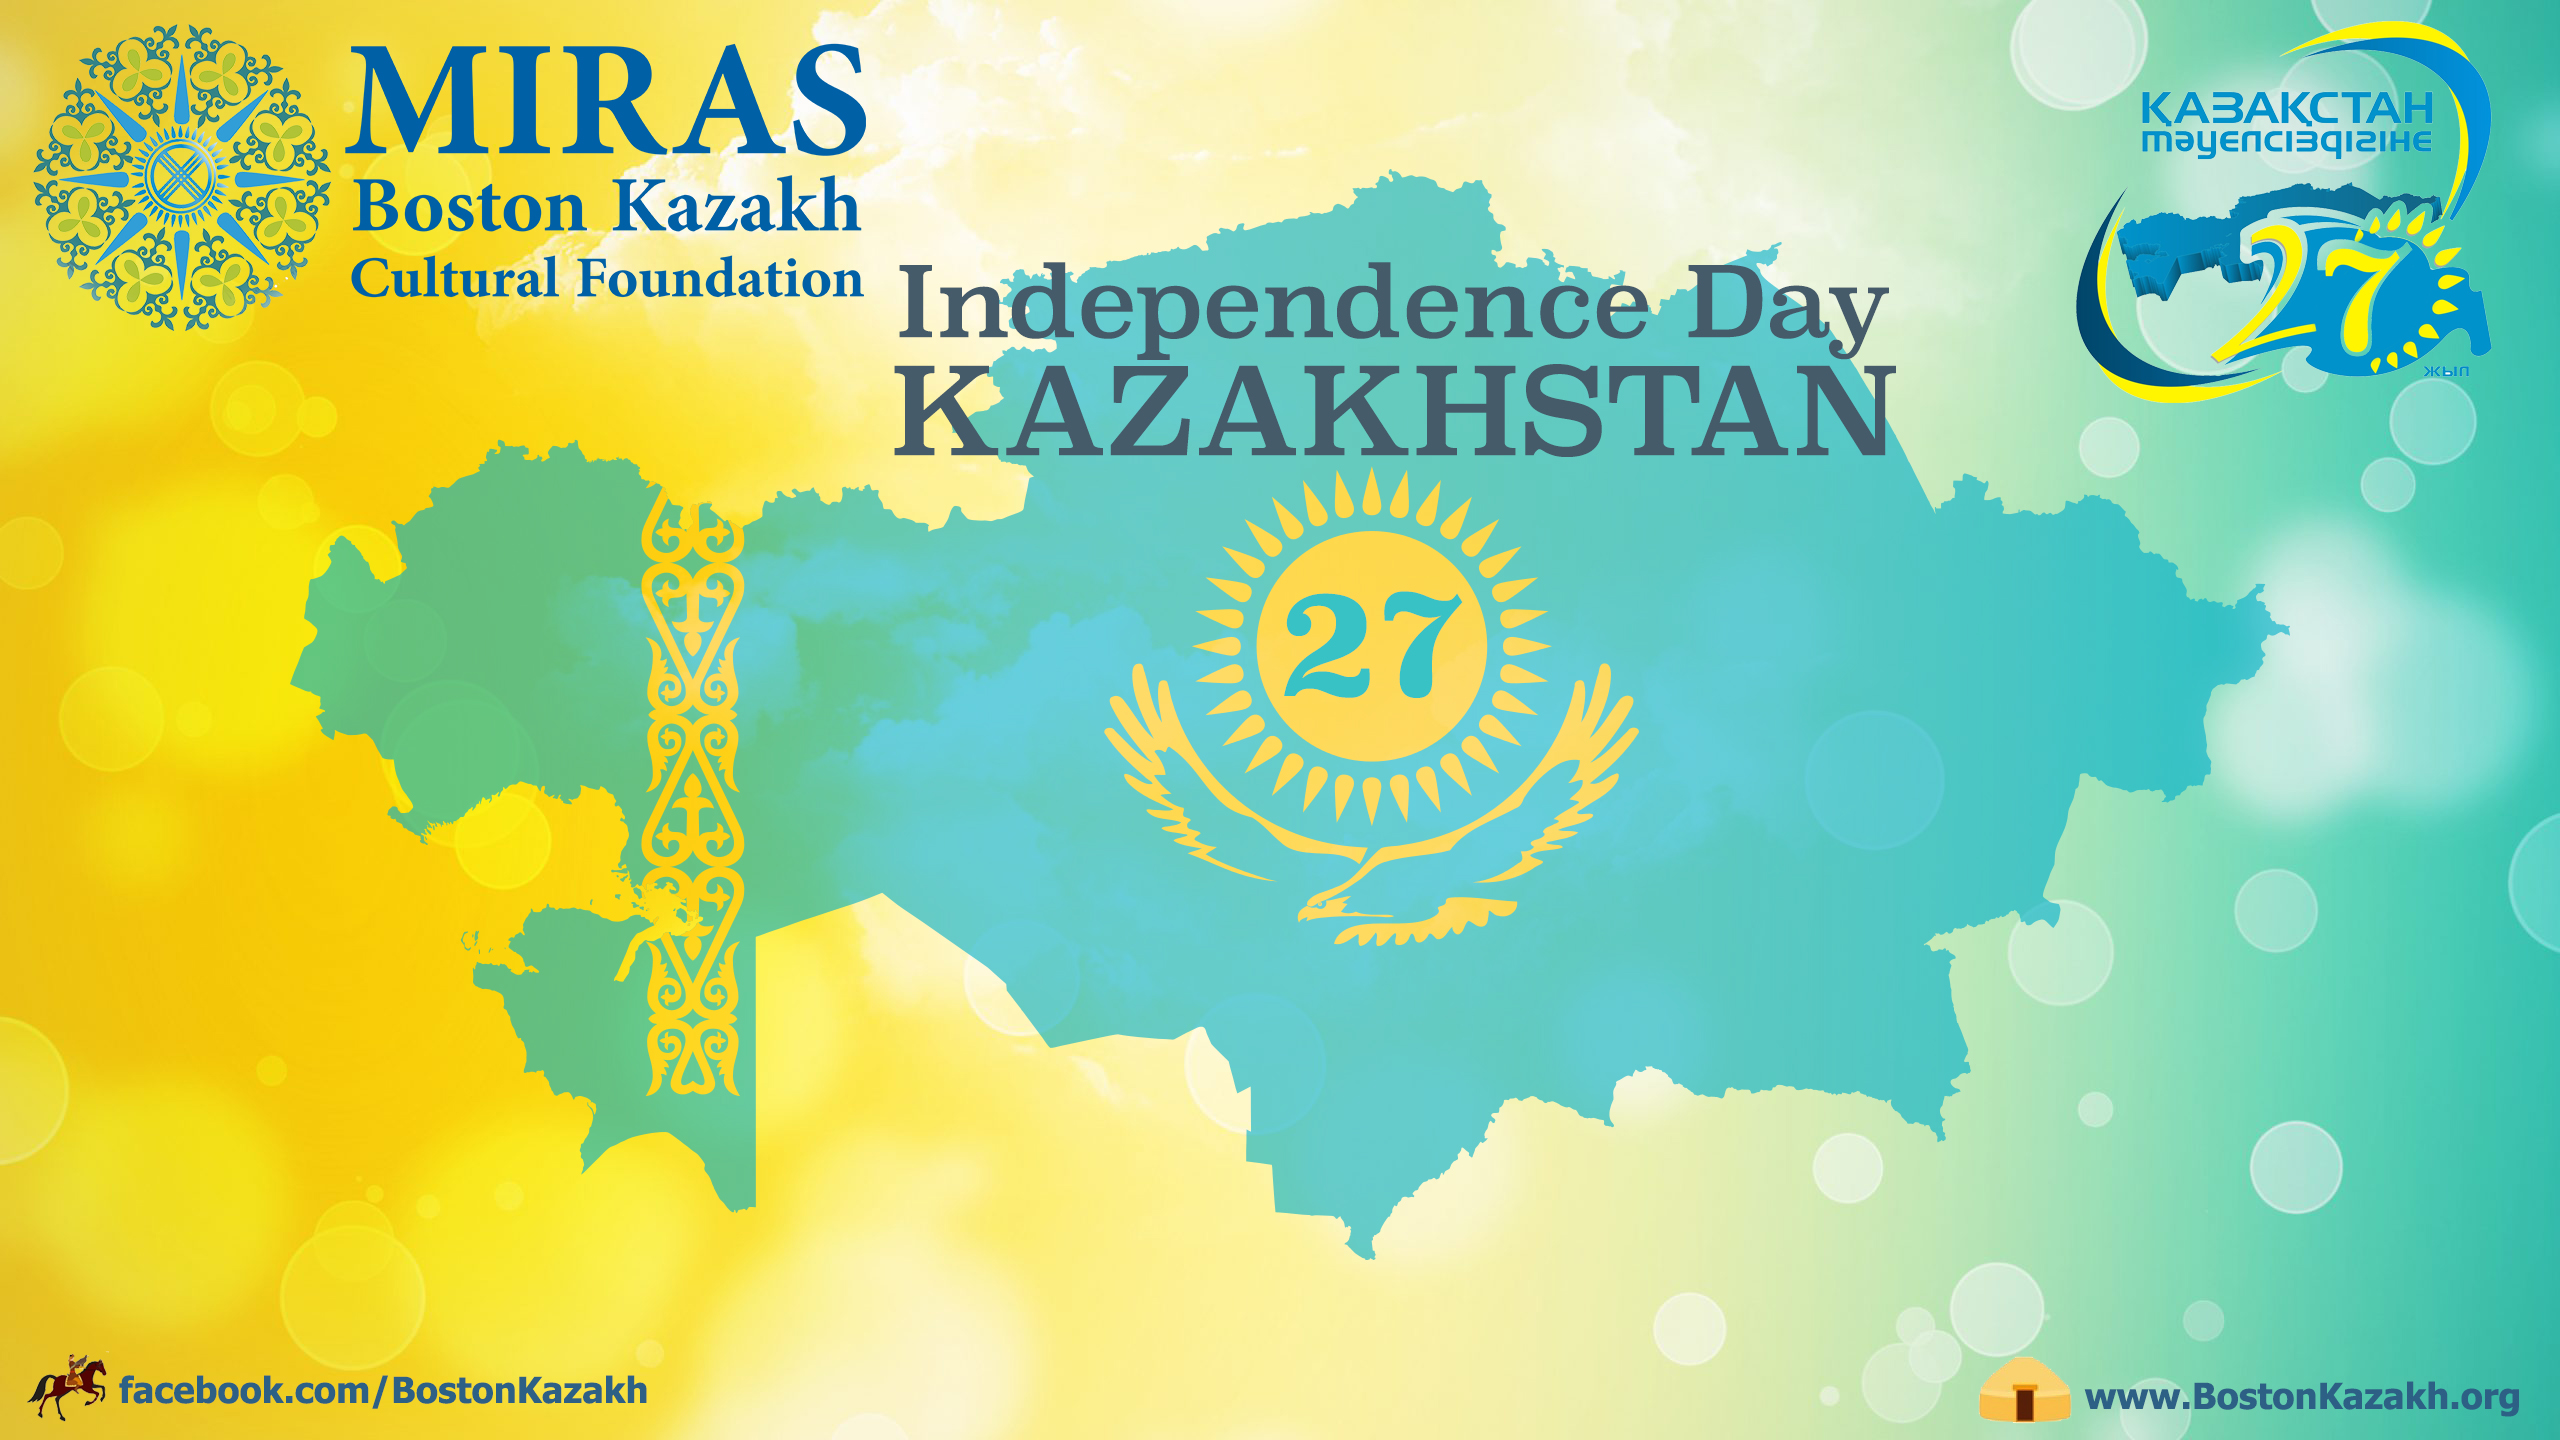 Kazakh me. Kazakhstan Independence Day. December 16-17, Independence Day. Независимость Казахстана. Навруз фон.